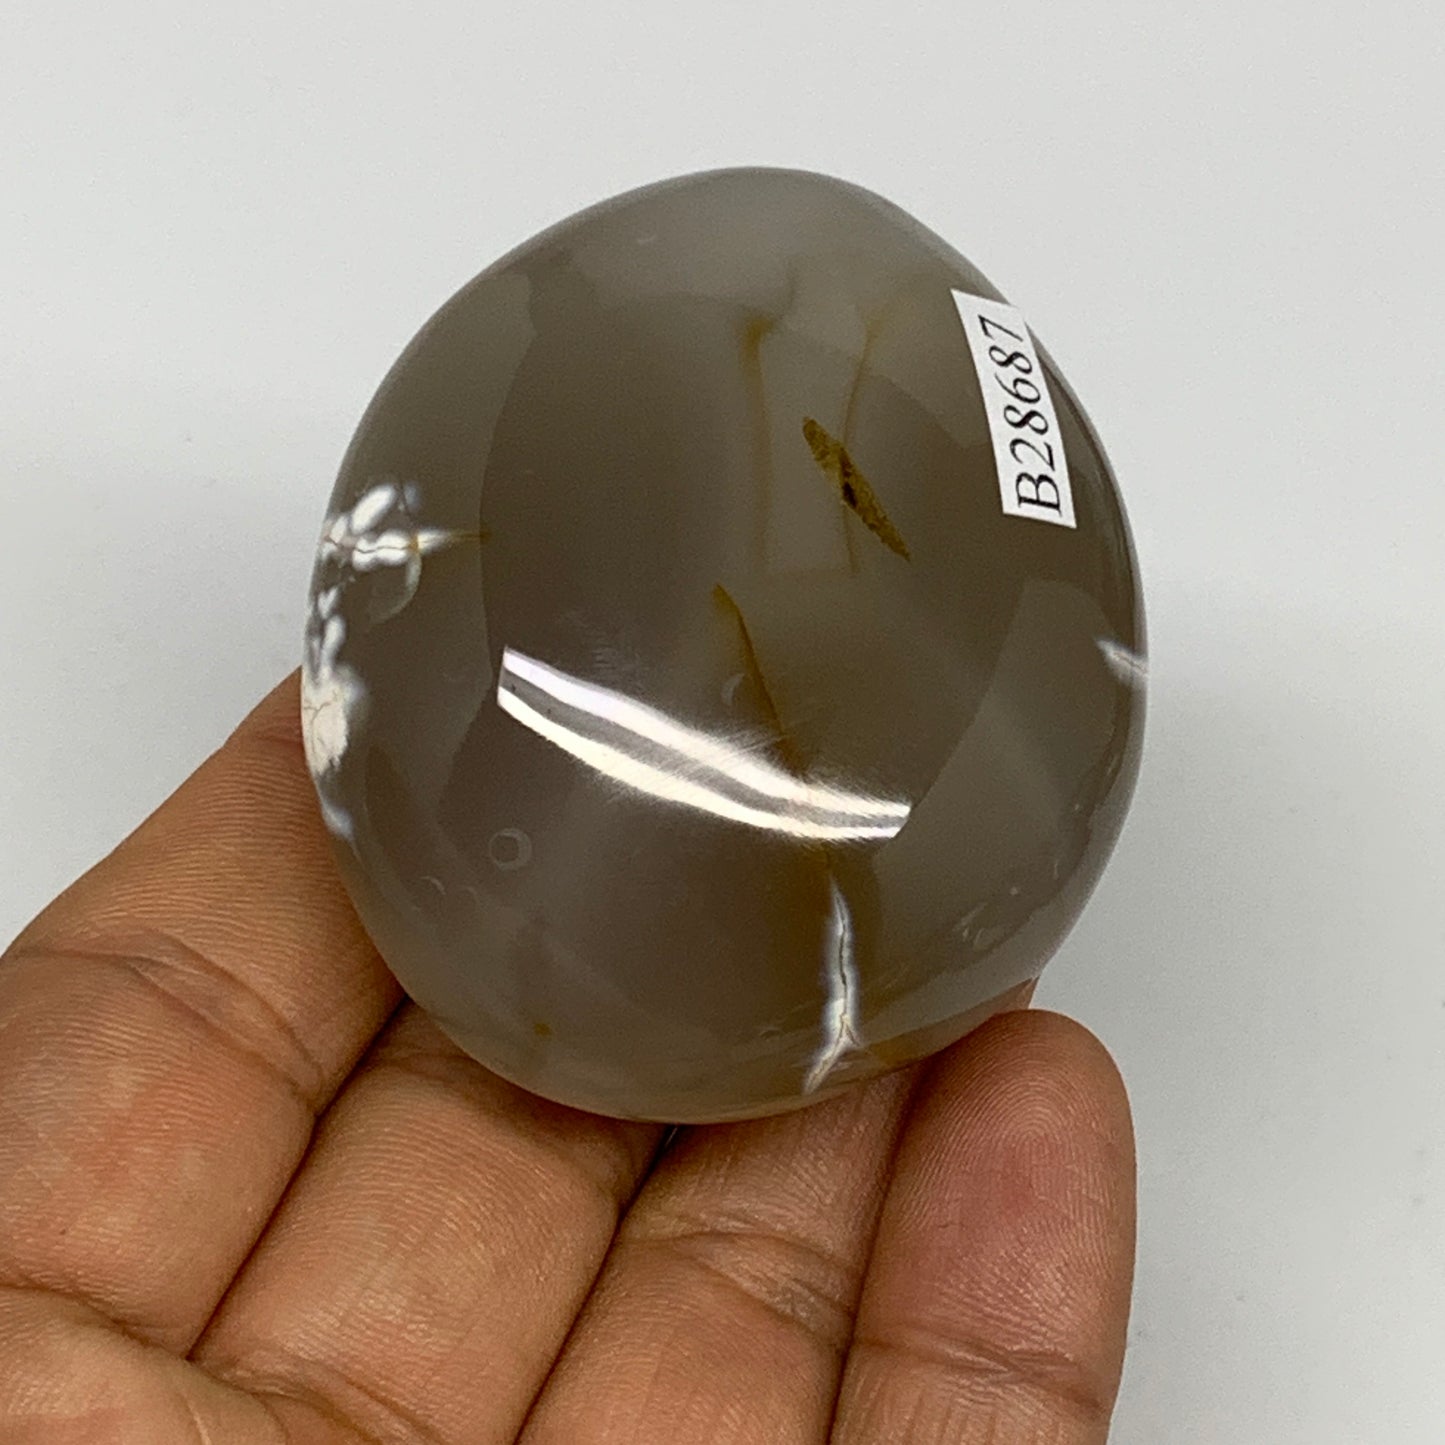 110.2g, 2.2"x1.8"x1.2" Orca Agate Palm-Stone Reiki Energy Crystal Reiki, B28687